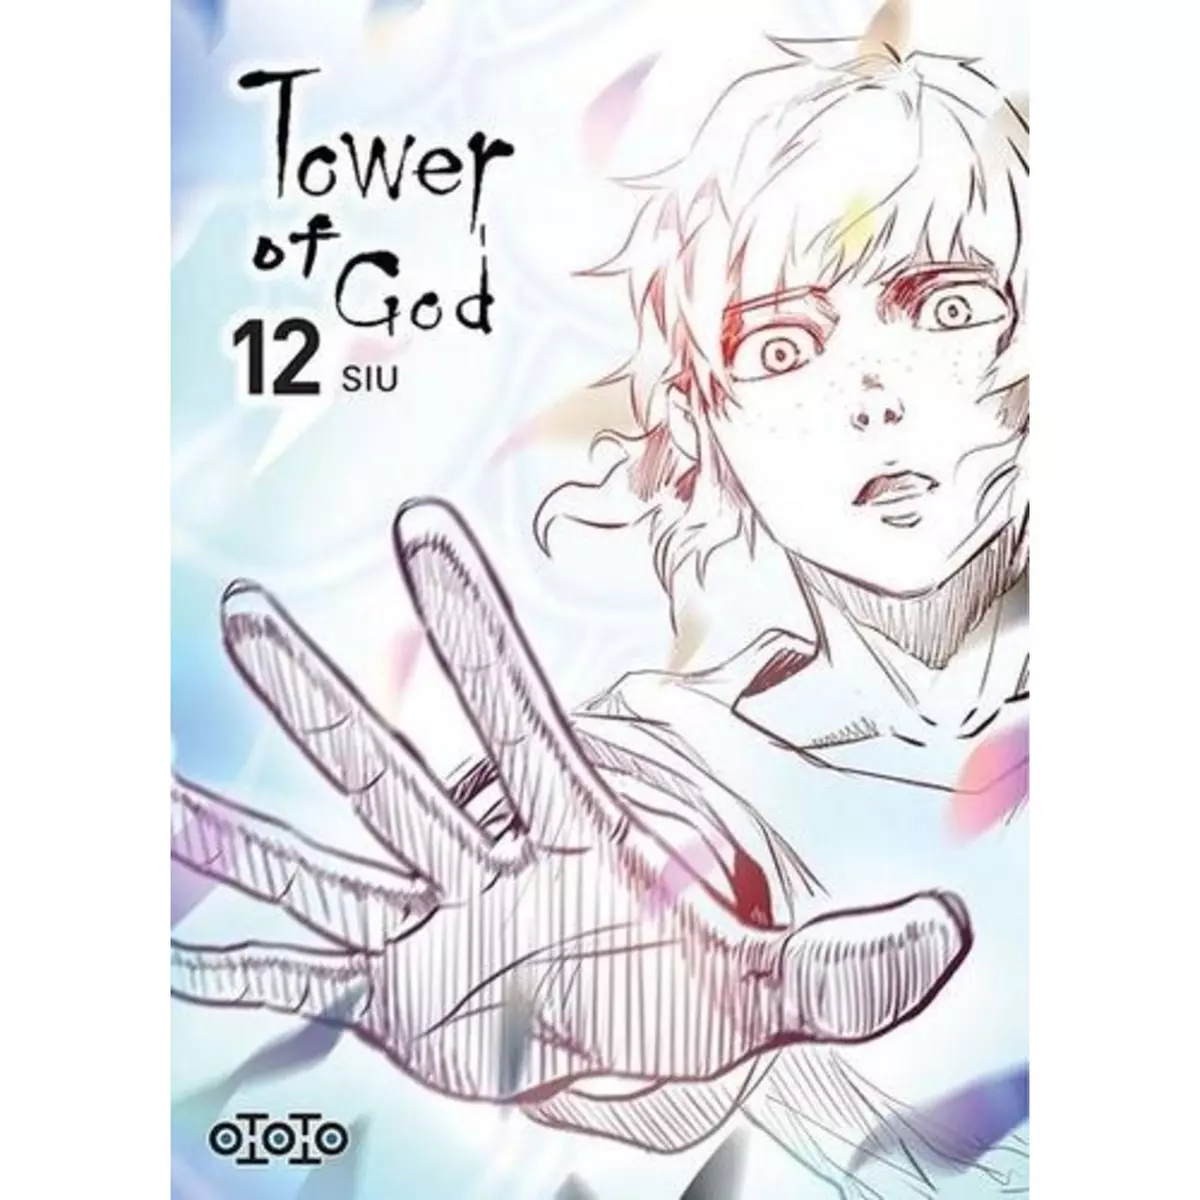  TOWER OF GOD TOME 12 , SIU